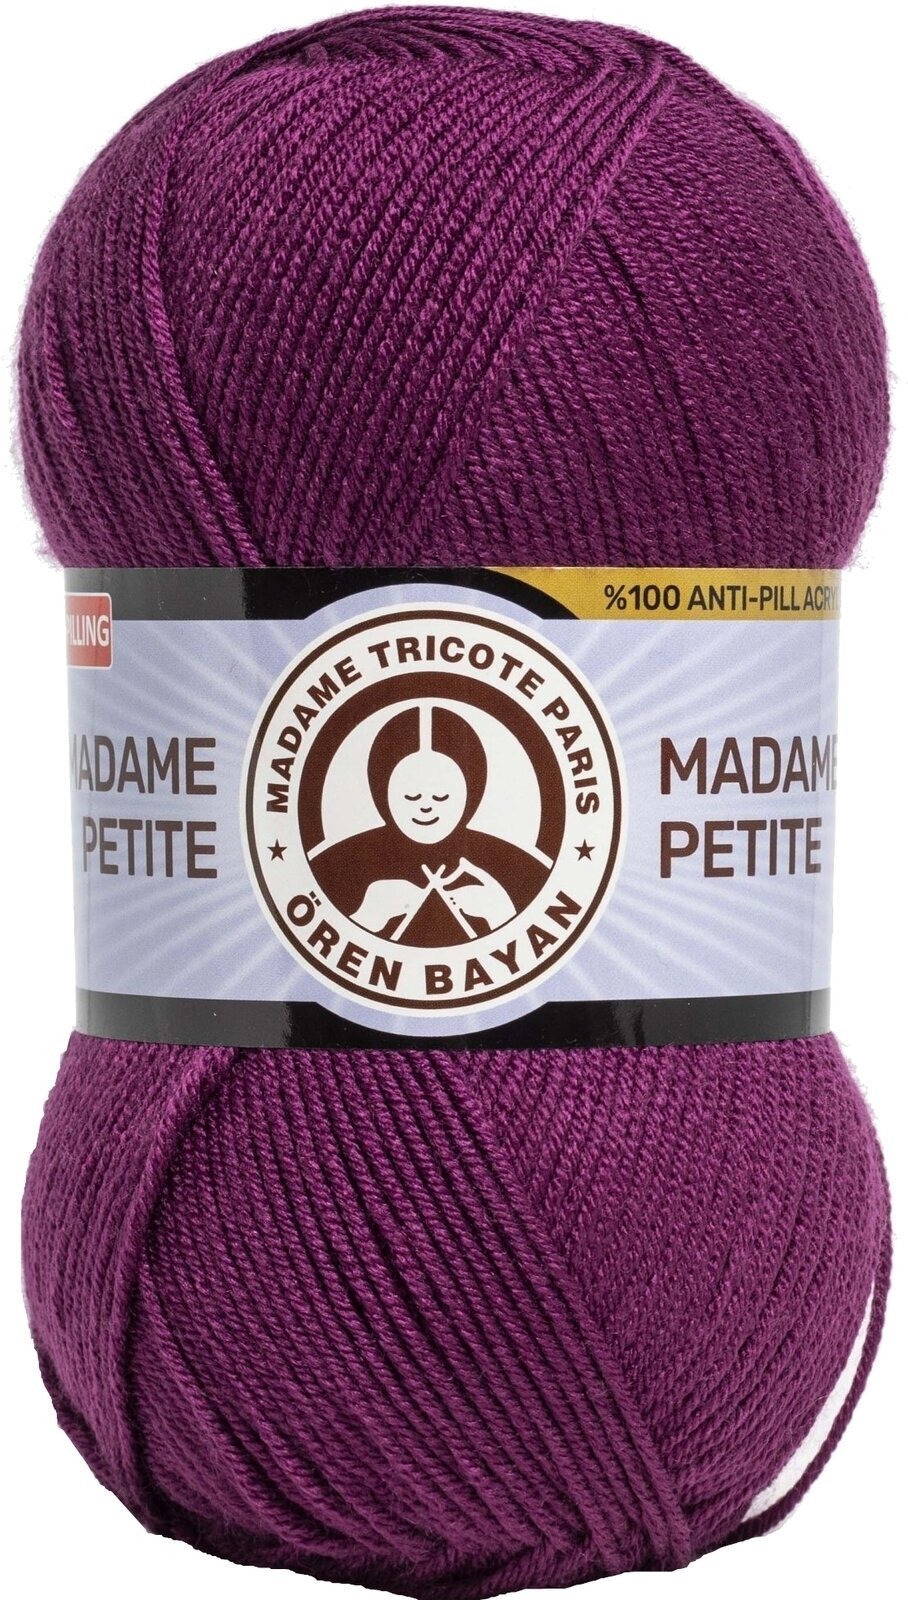 Strickgarn Madame Tricote Paris Madame Petite 3848 52 Strickgarn